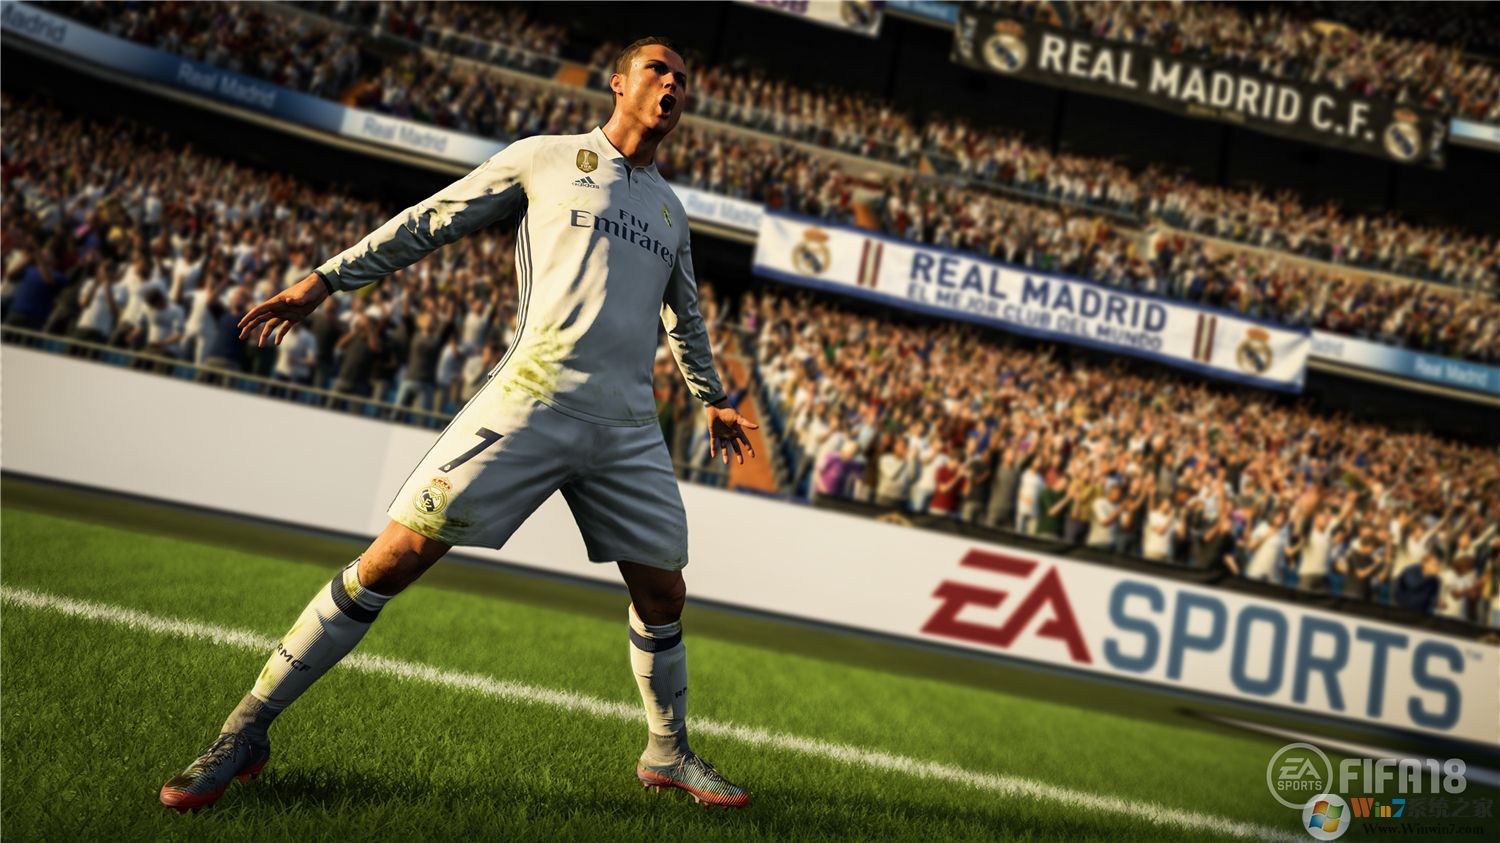 FIFA 18 破解版|FIFA 18 STEAMPUNKS 中文免安装版